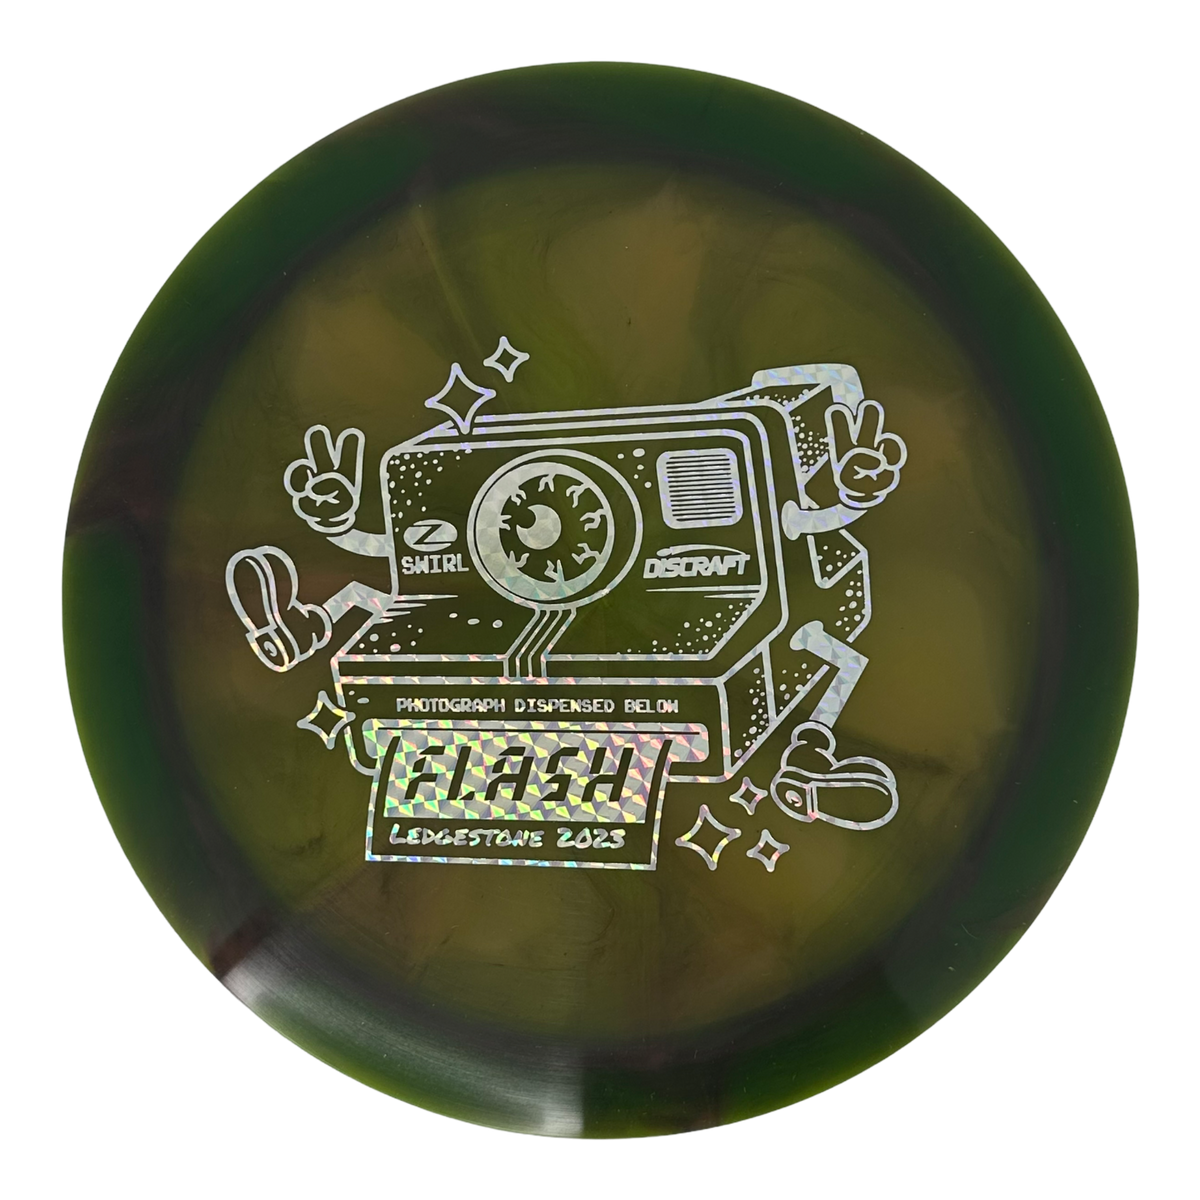 Discraft Z Swirl Flash - Ledgestone 1 (2023)